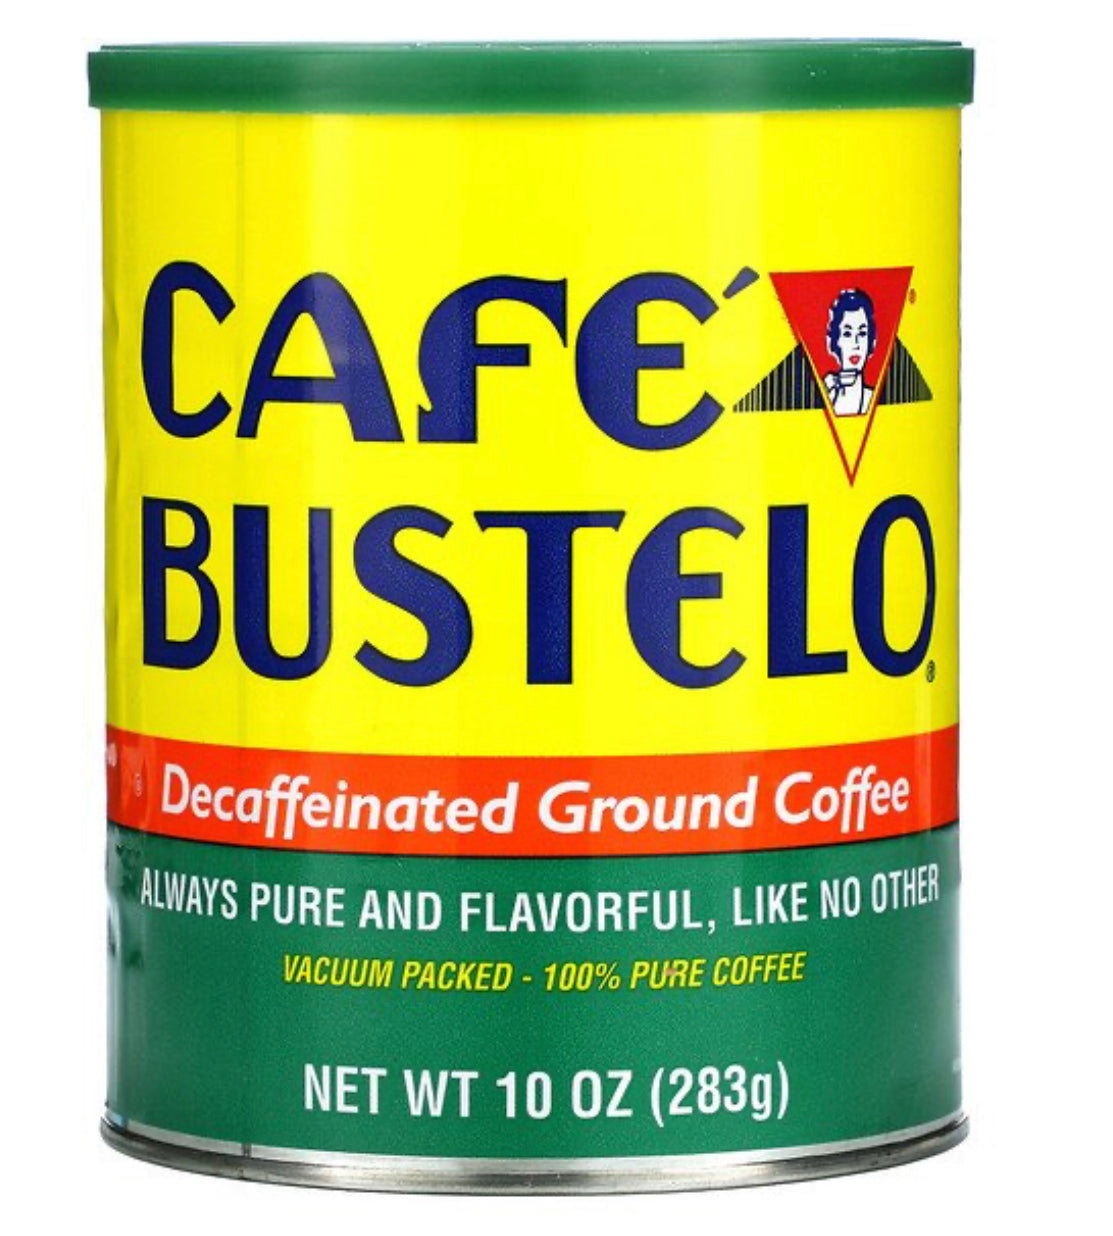 Cafe Bustelo Decaffeinated Ground Coffee 10oz